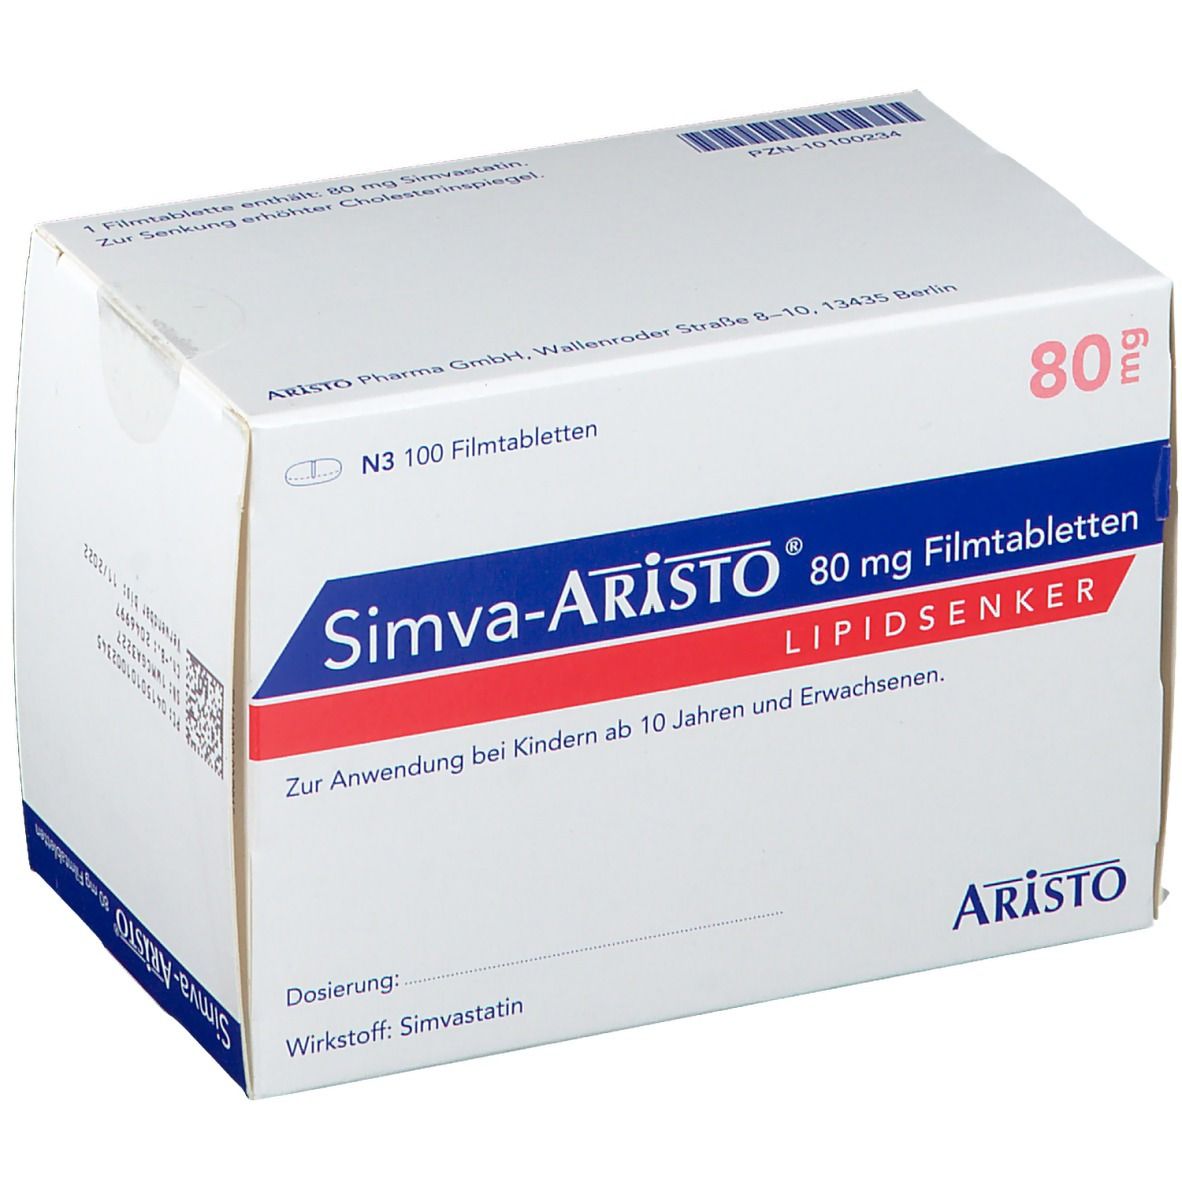 Simva-Aristo® 80 mg